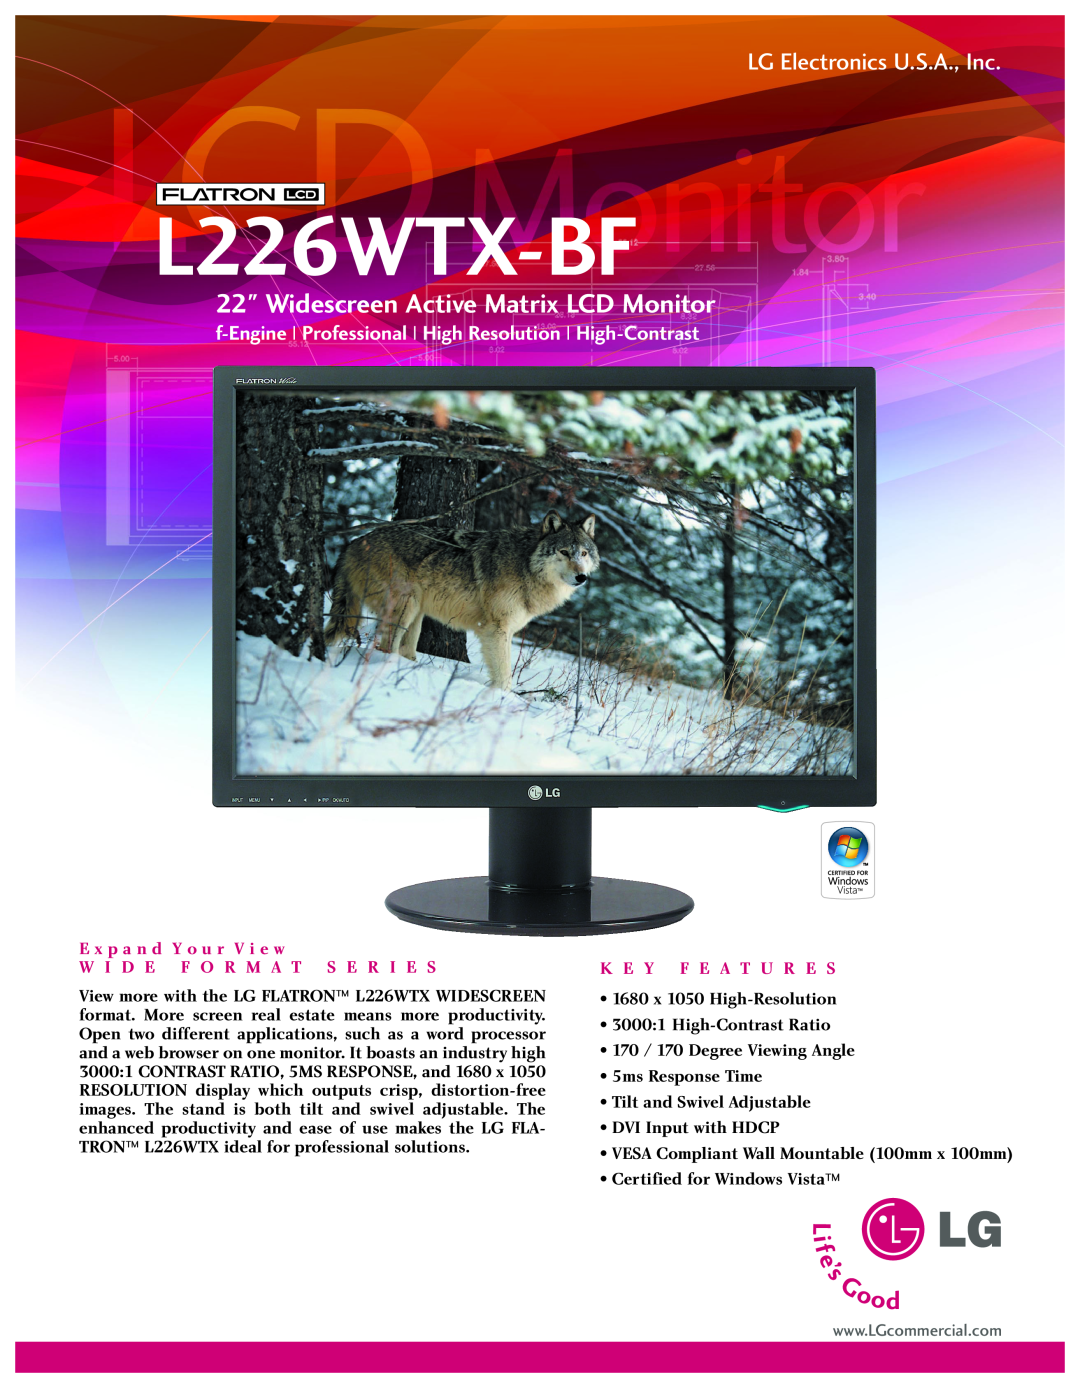 LG Electronics L226WTX-BF manual Widescreen Active Matrix LCD Monitor, LG Electronics U.S.A., Inc, K E Y F E A T U R E S 